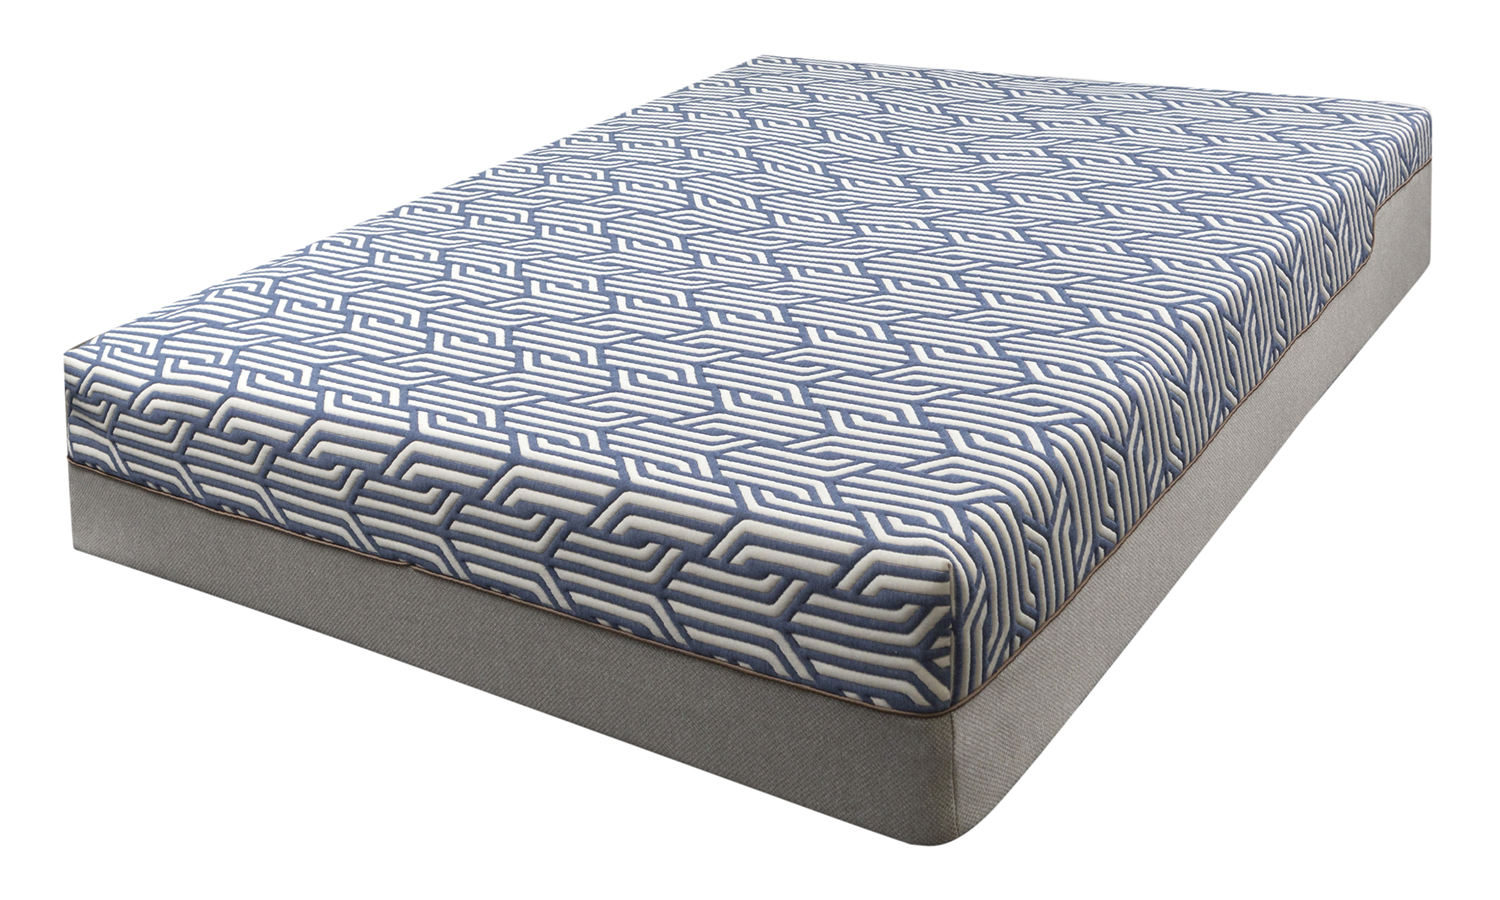 mattress cover base material